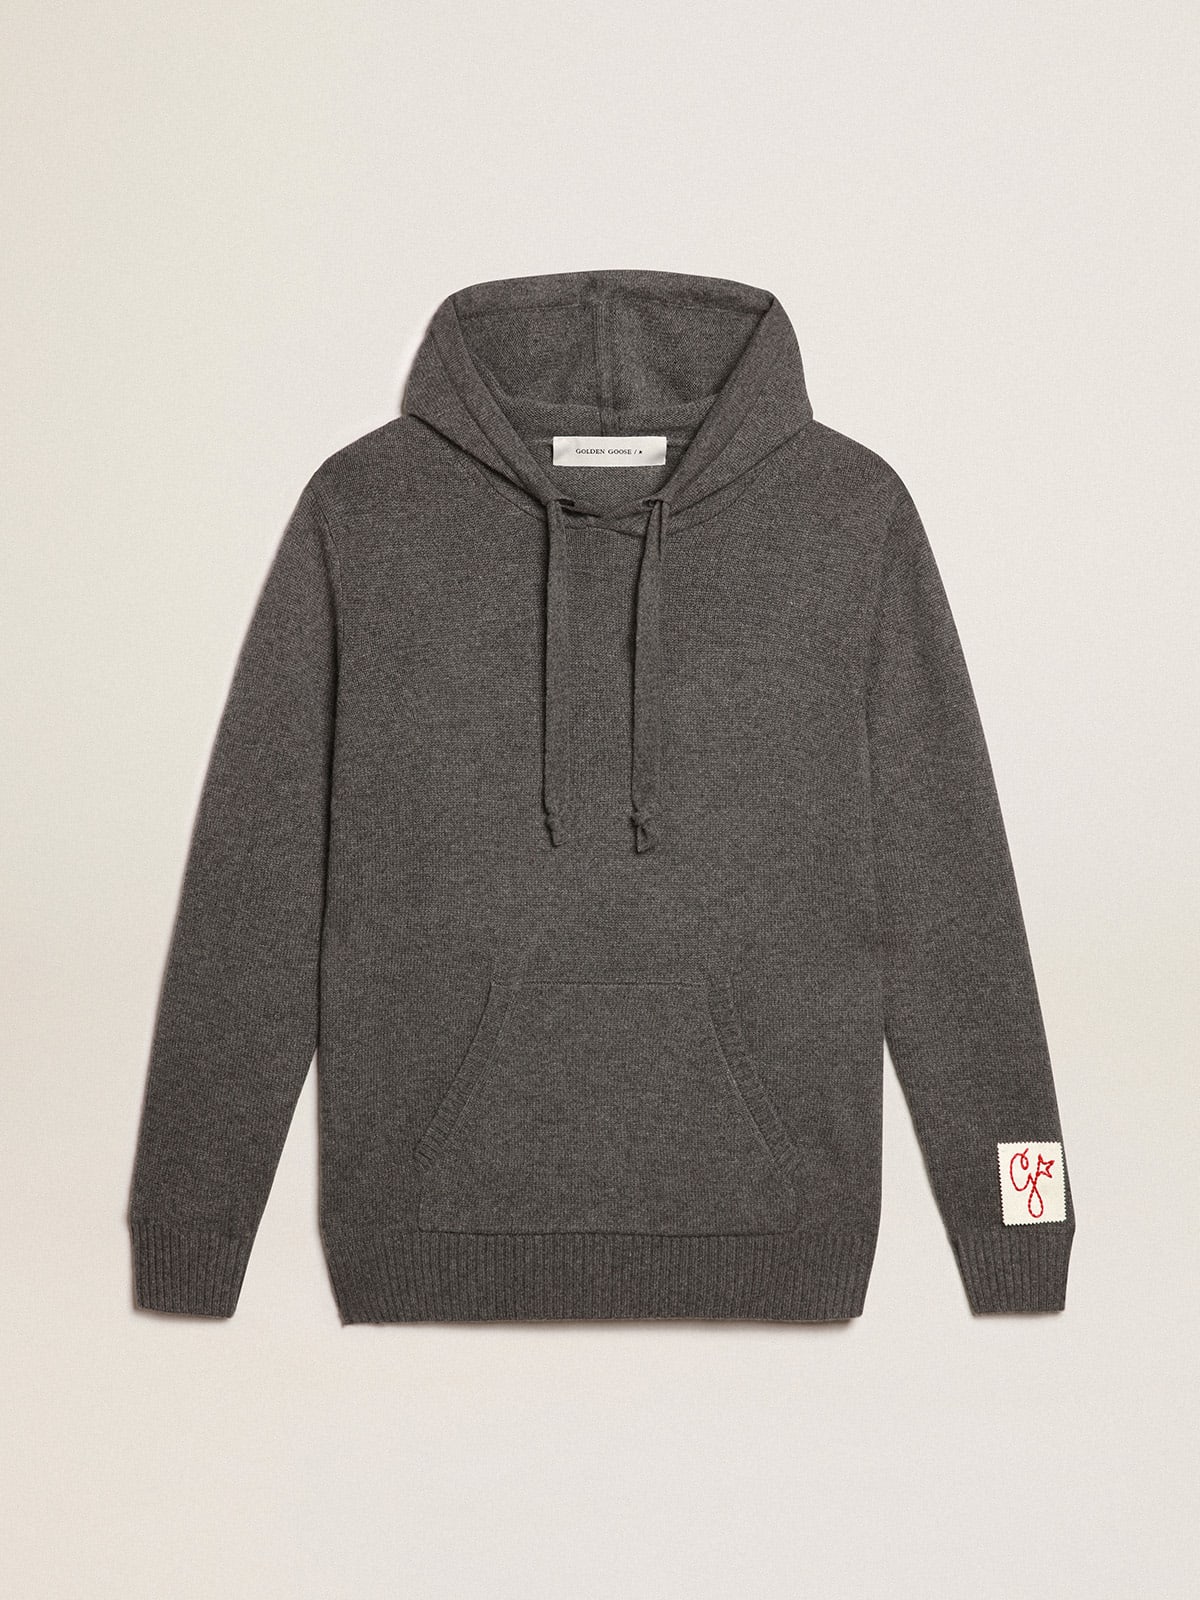 Men's gray melange cashmere blend sweatshirt with hood